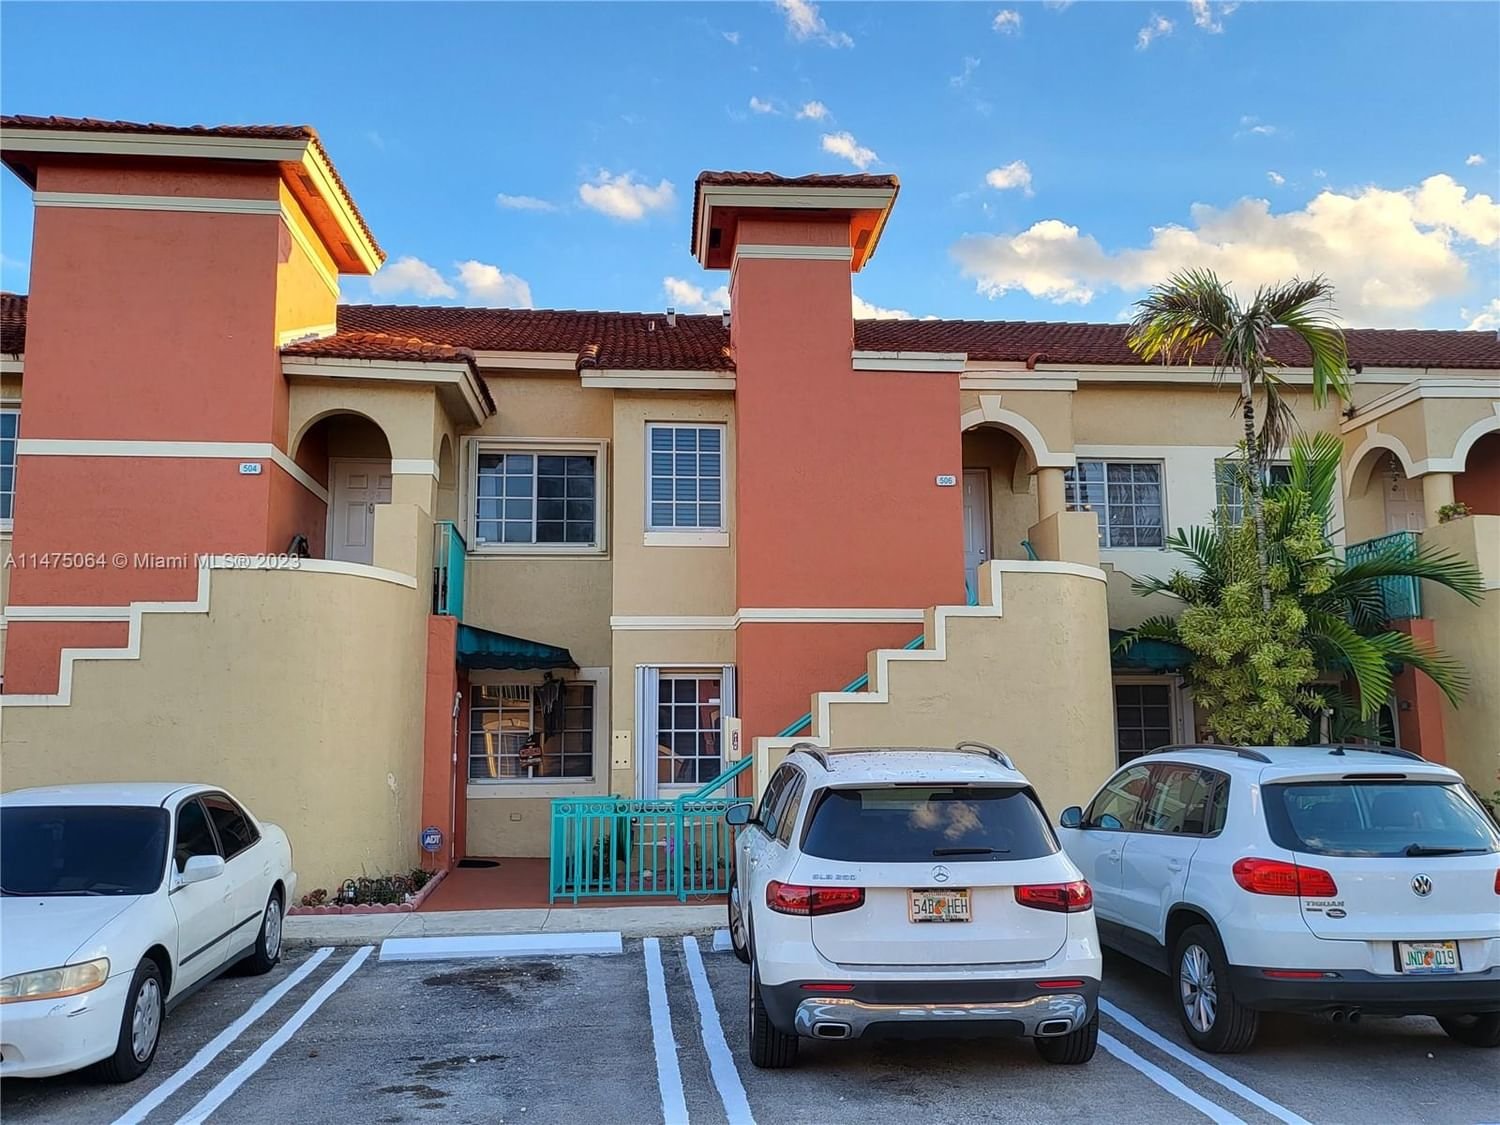 Real estate property located at 7175 173rd Dr #506-5, Miami-Dade County, BONITA GOLF VIEW TOWNVILL, Hialeah, FL